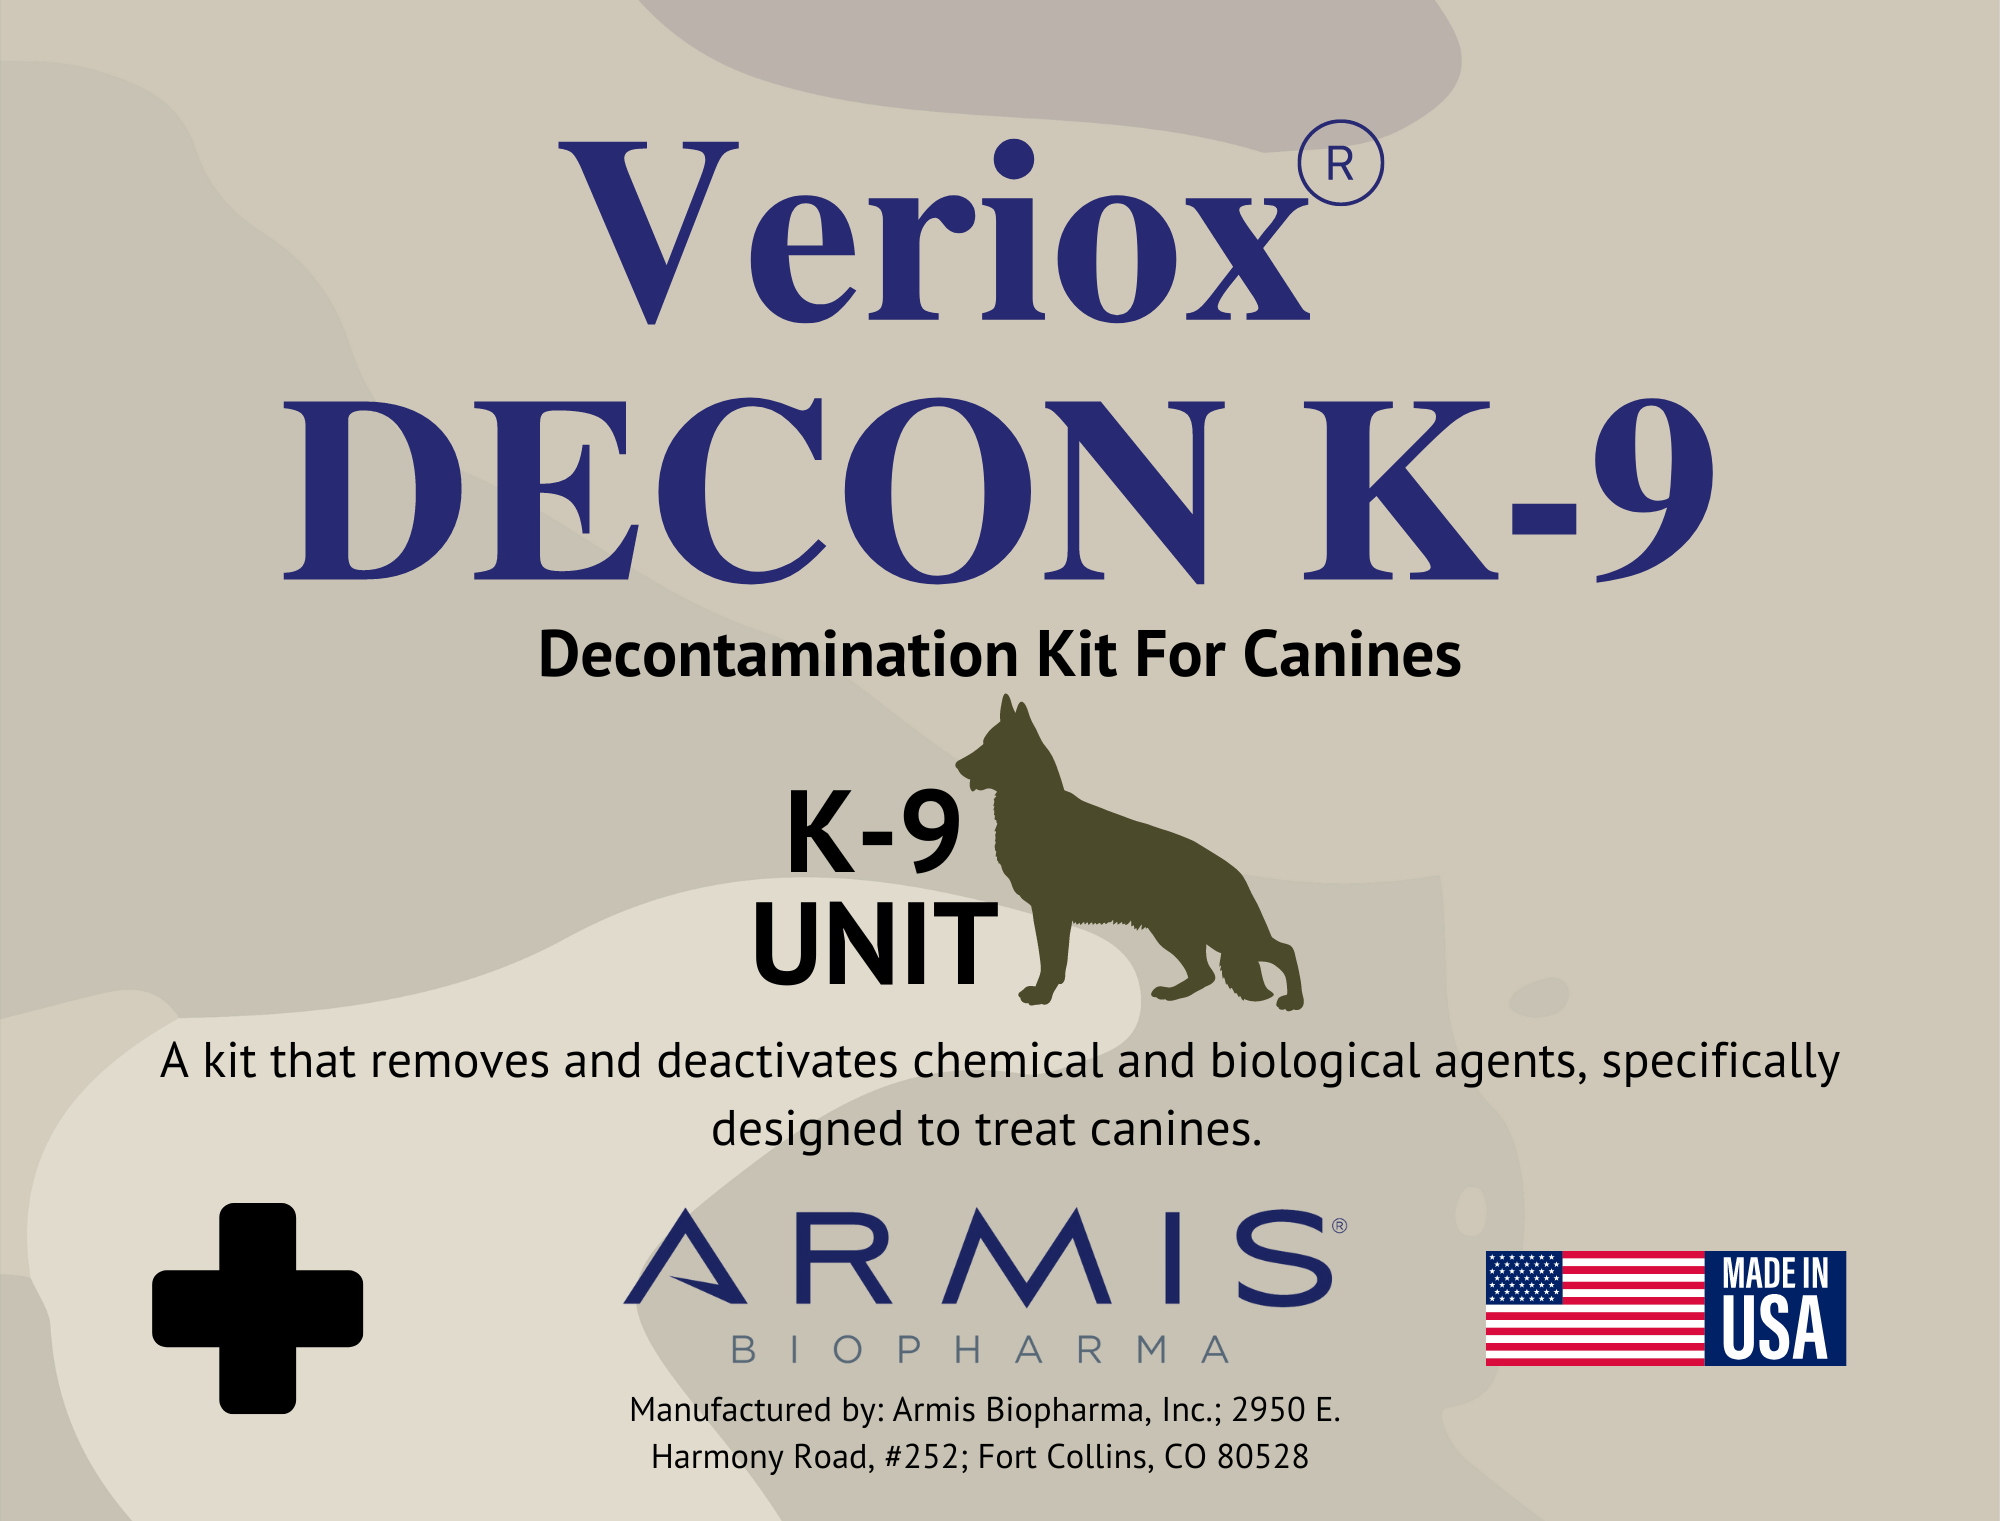 veriox deon k-9 by armis biopharma image of label